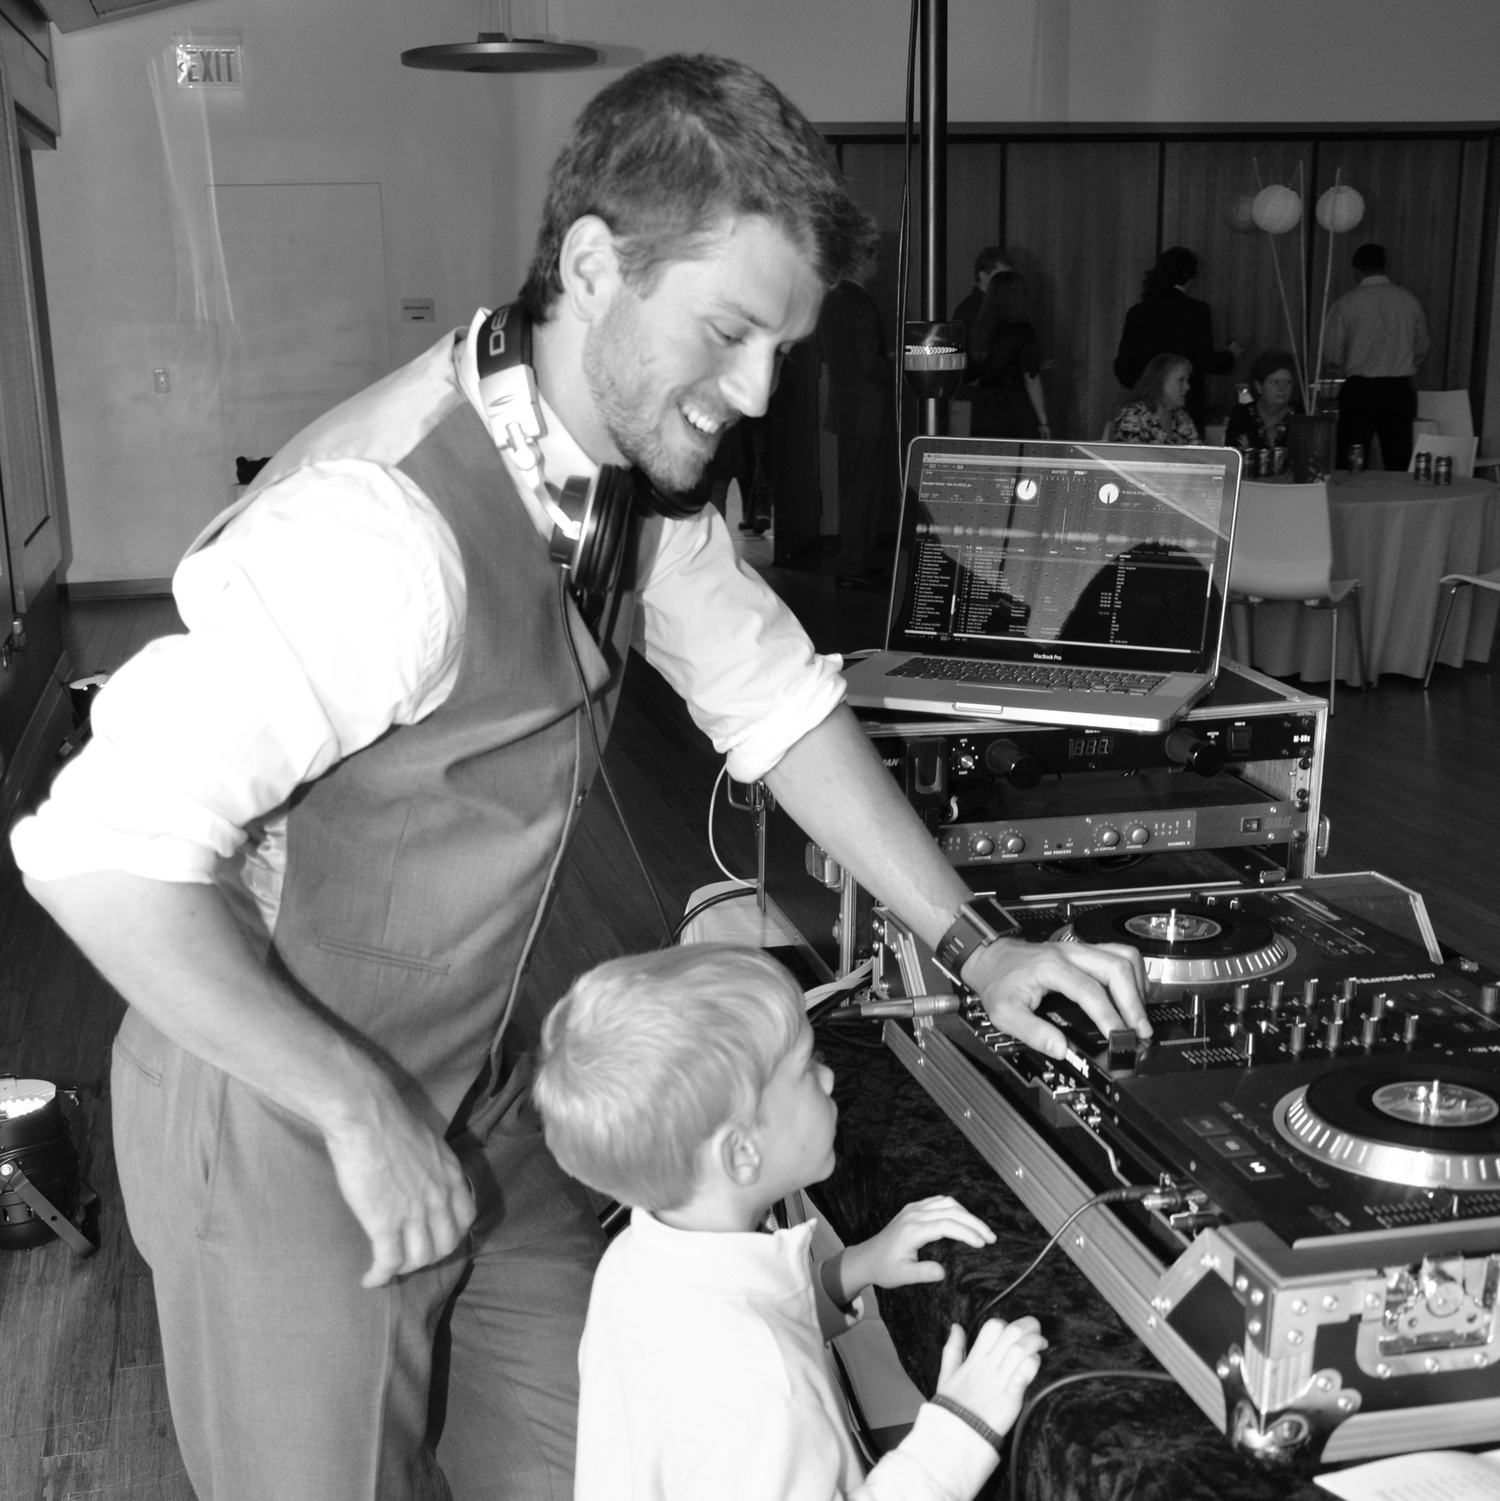 DJ Lucas London teaching a kid how to DJ